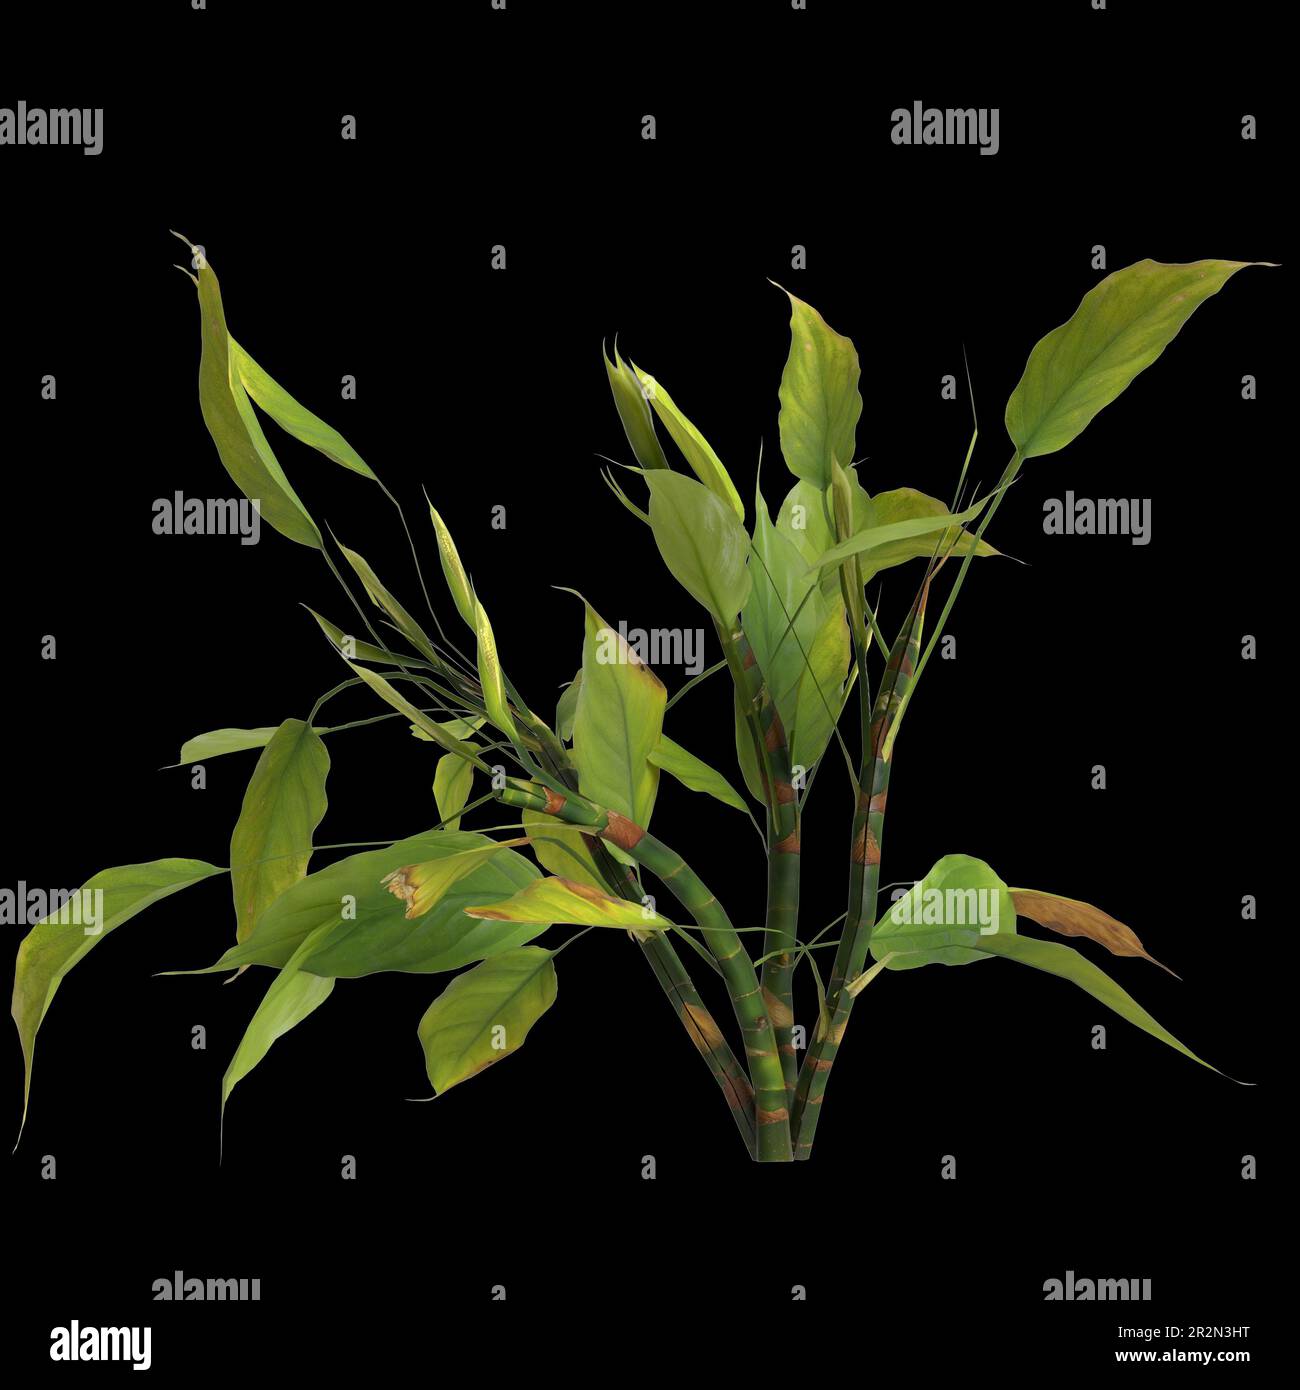 3d illustration of aglaonema modestum plant isolated on black background Stock Photo